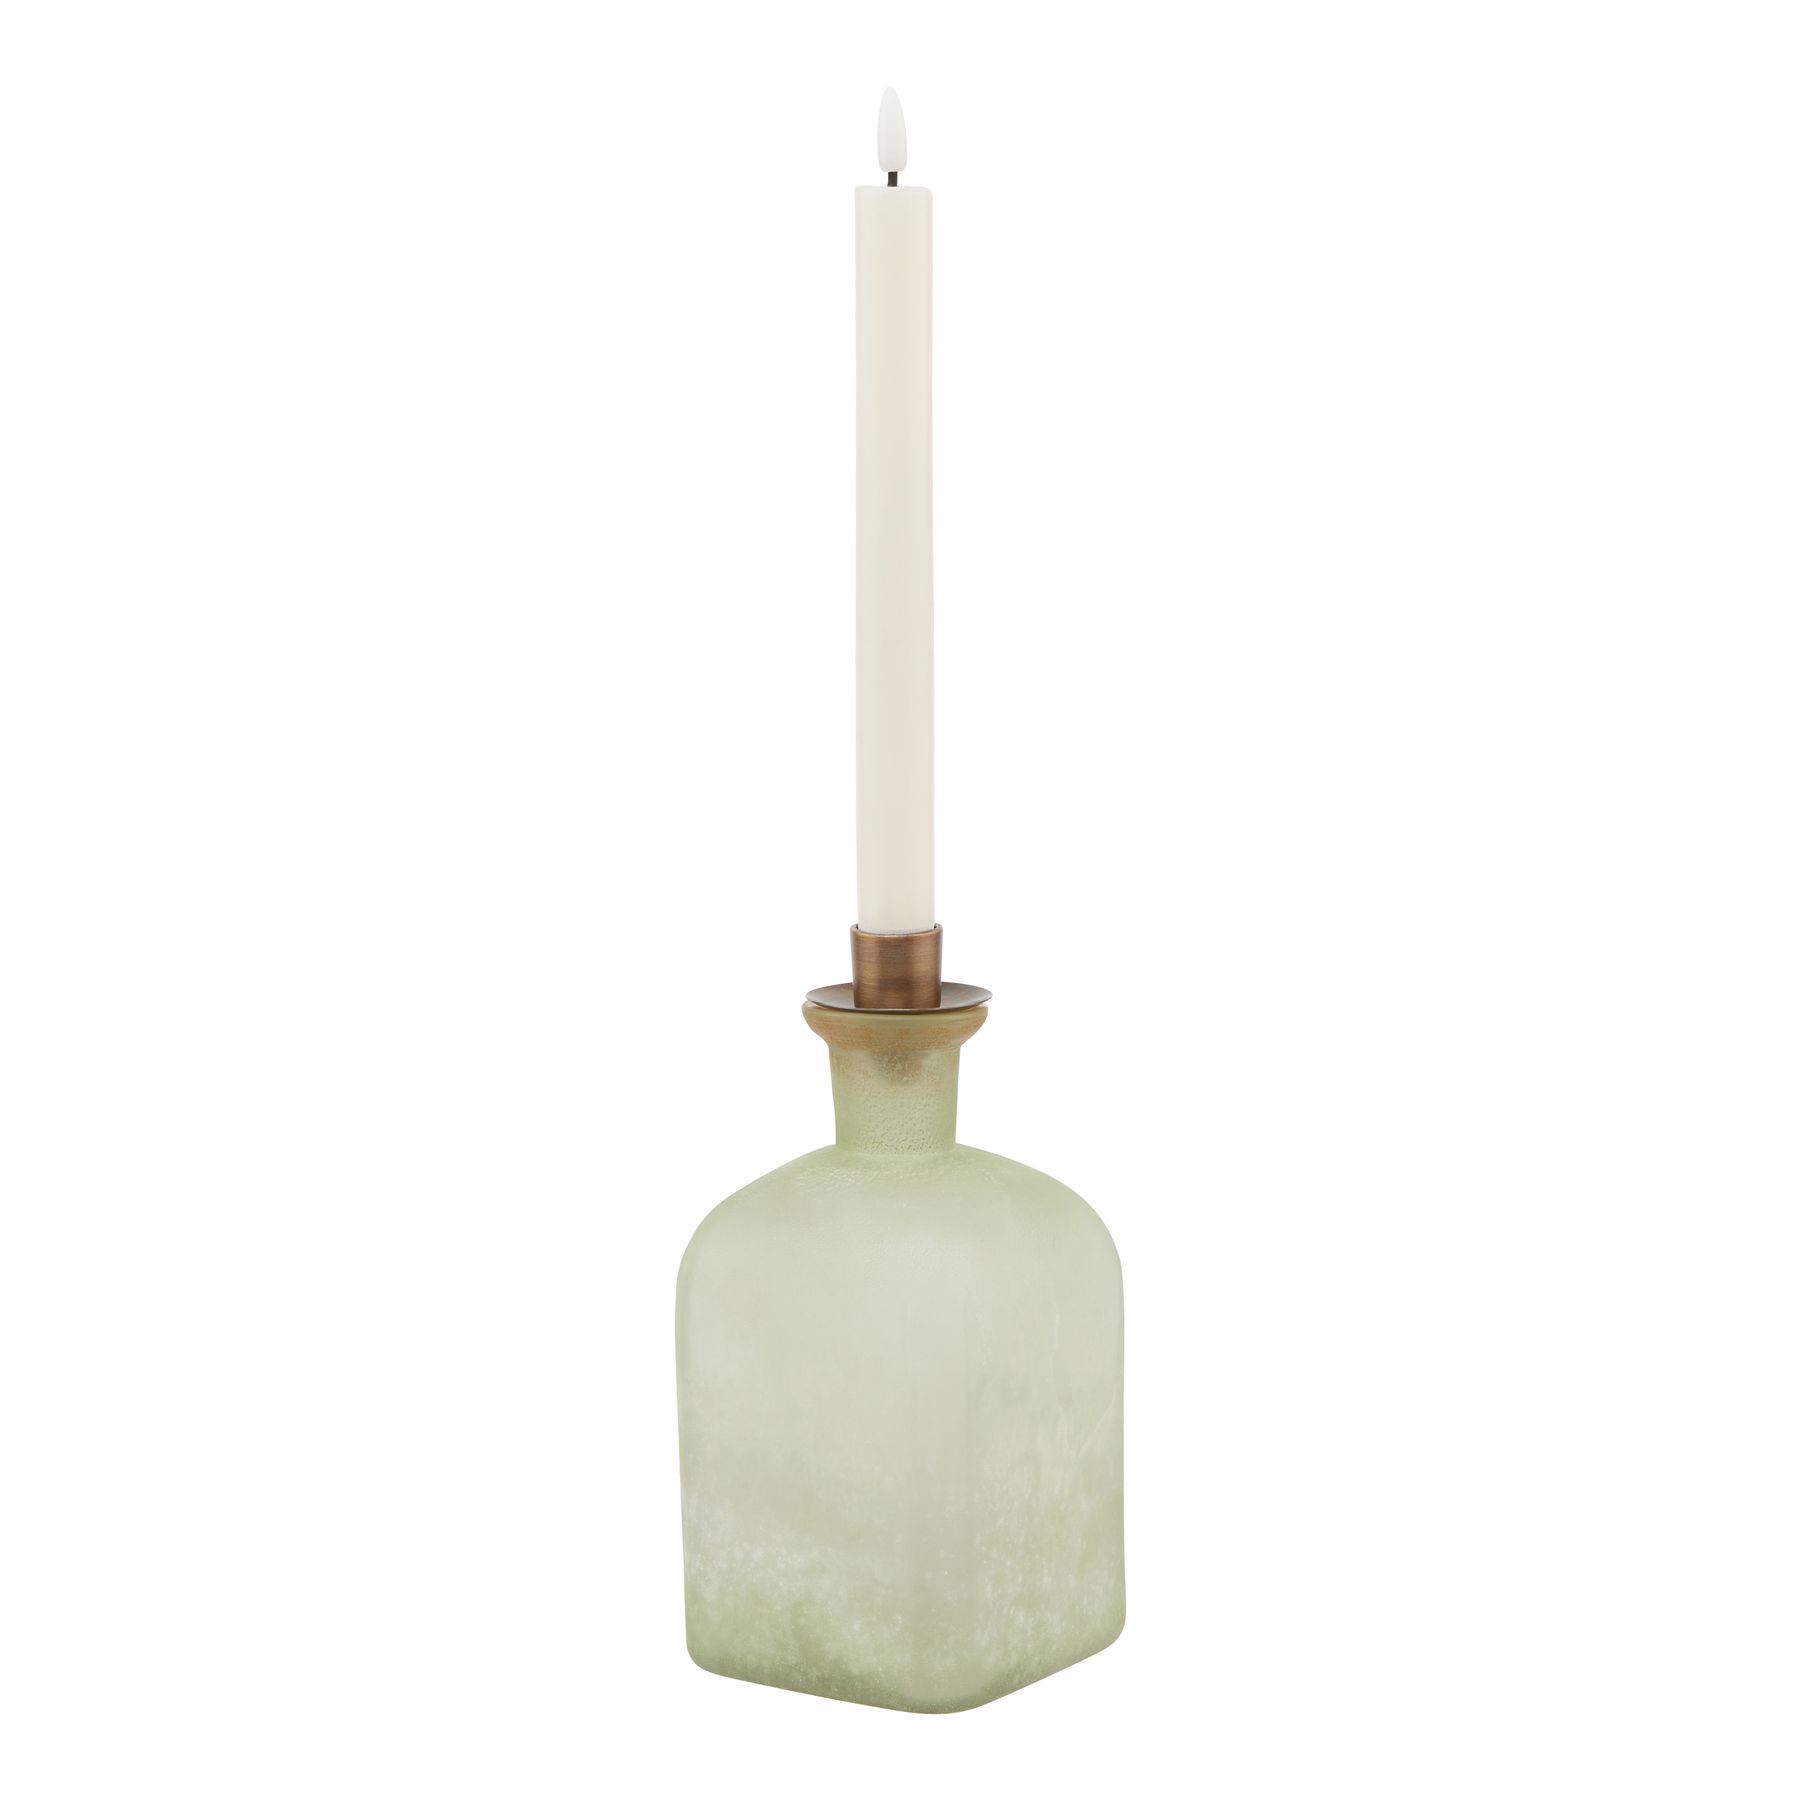 Smoked Sage and Aged Brass Large Candle Holder Vase - Image 1